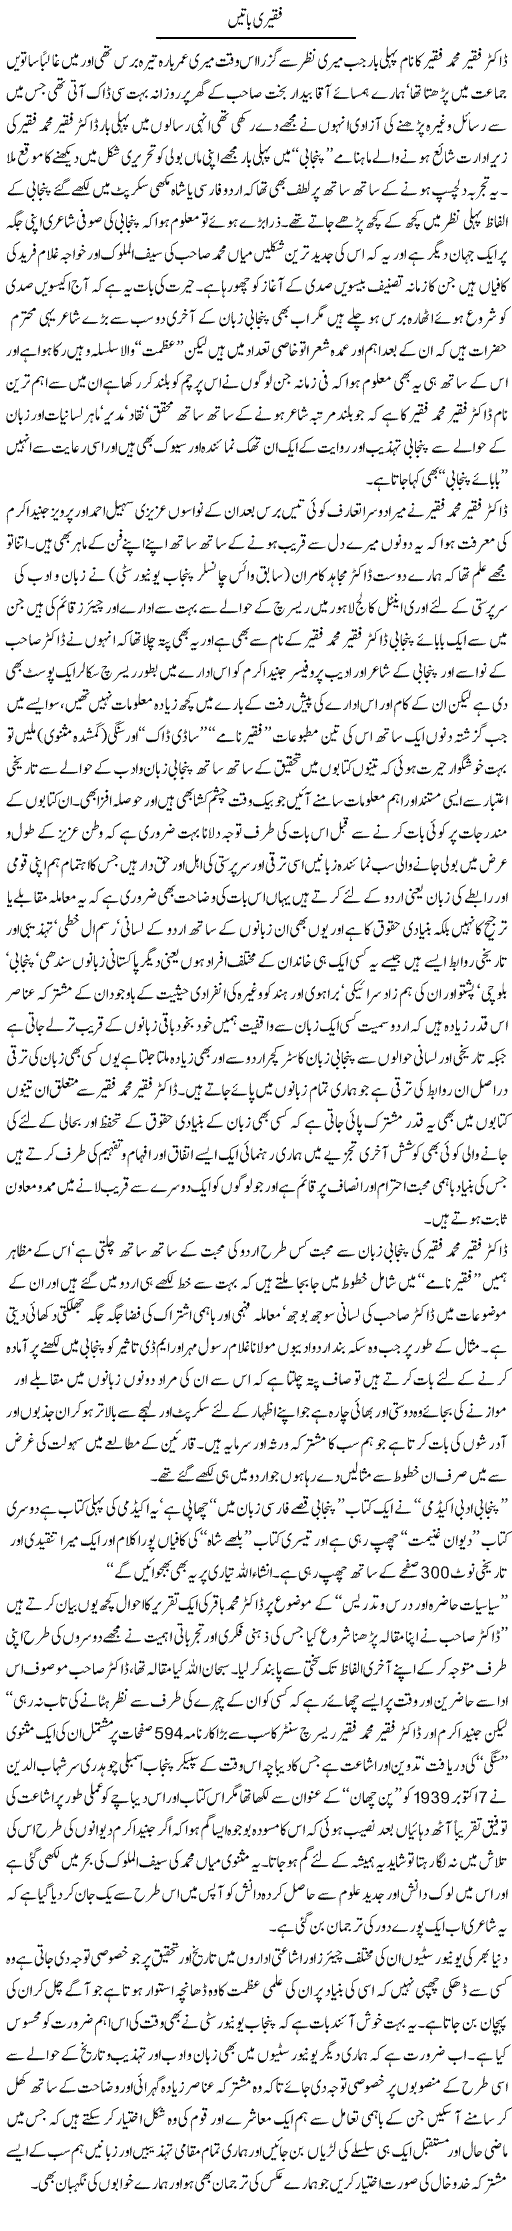 Faqeeri Batain | Amjad Islam Amjad | Daily Urdu Columns